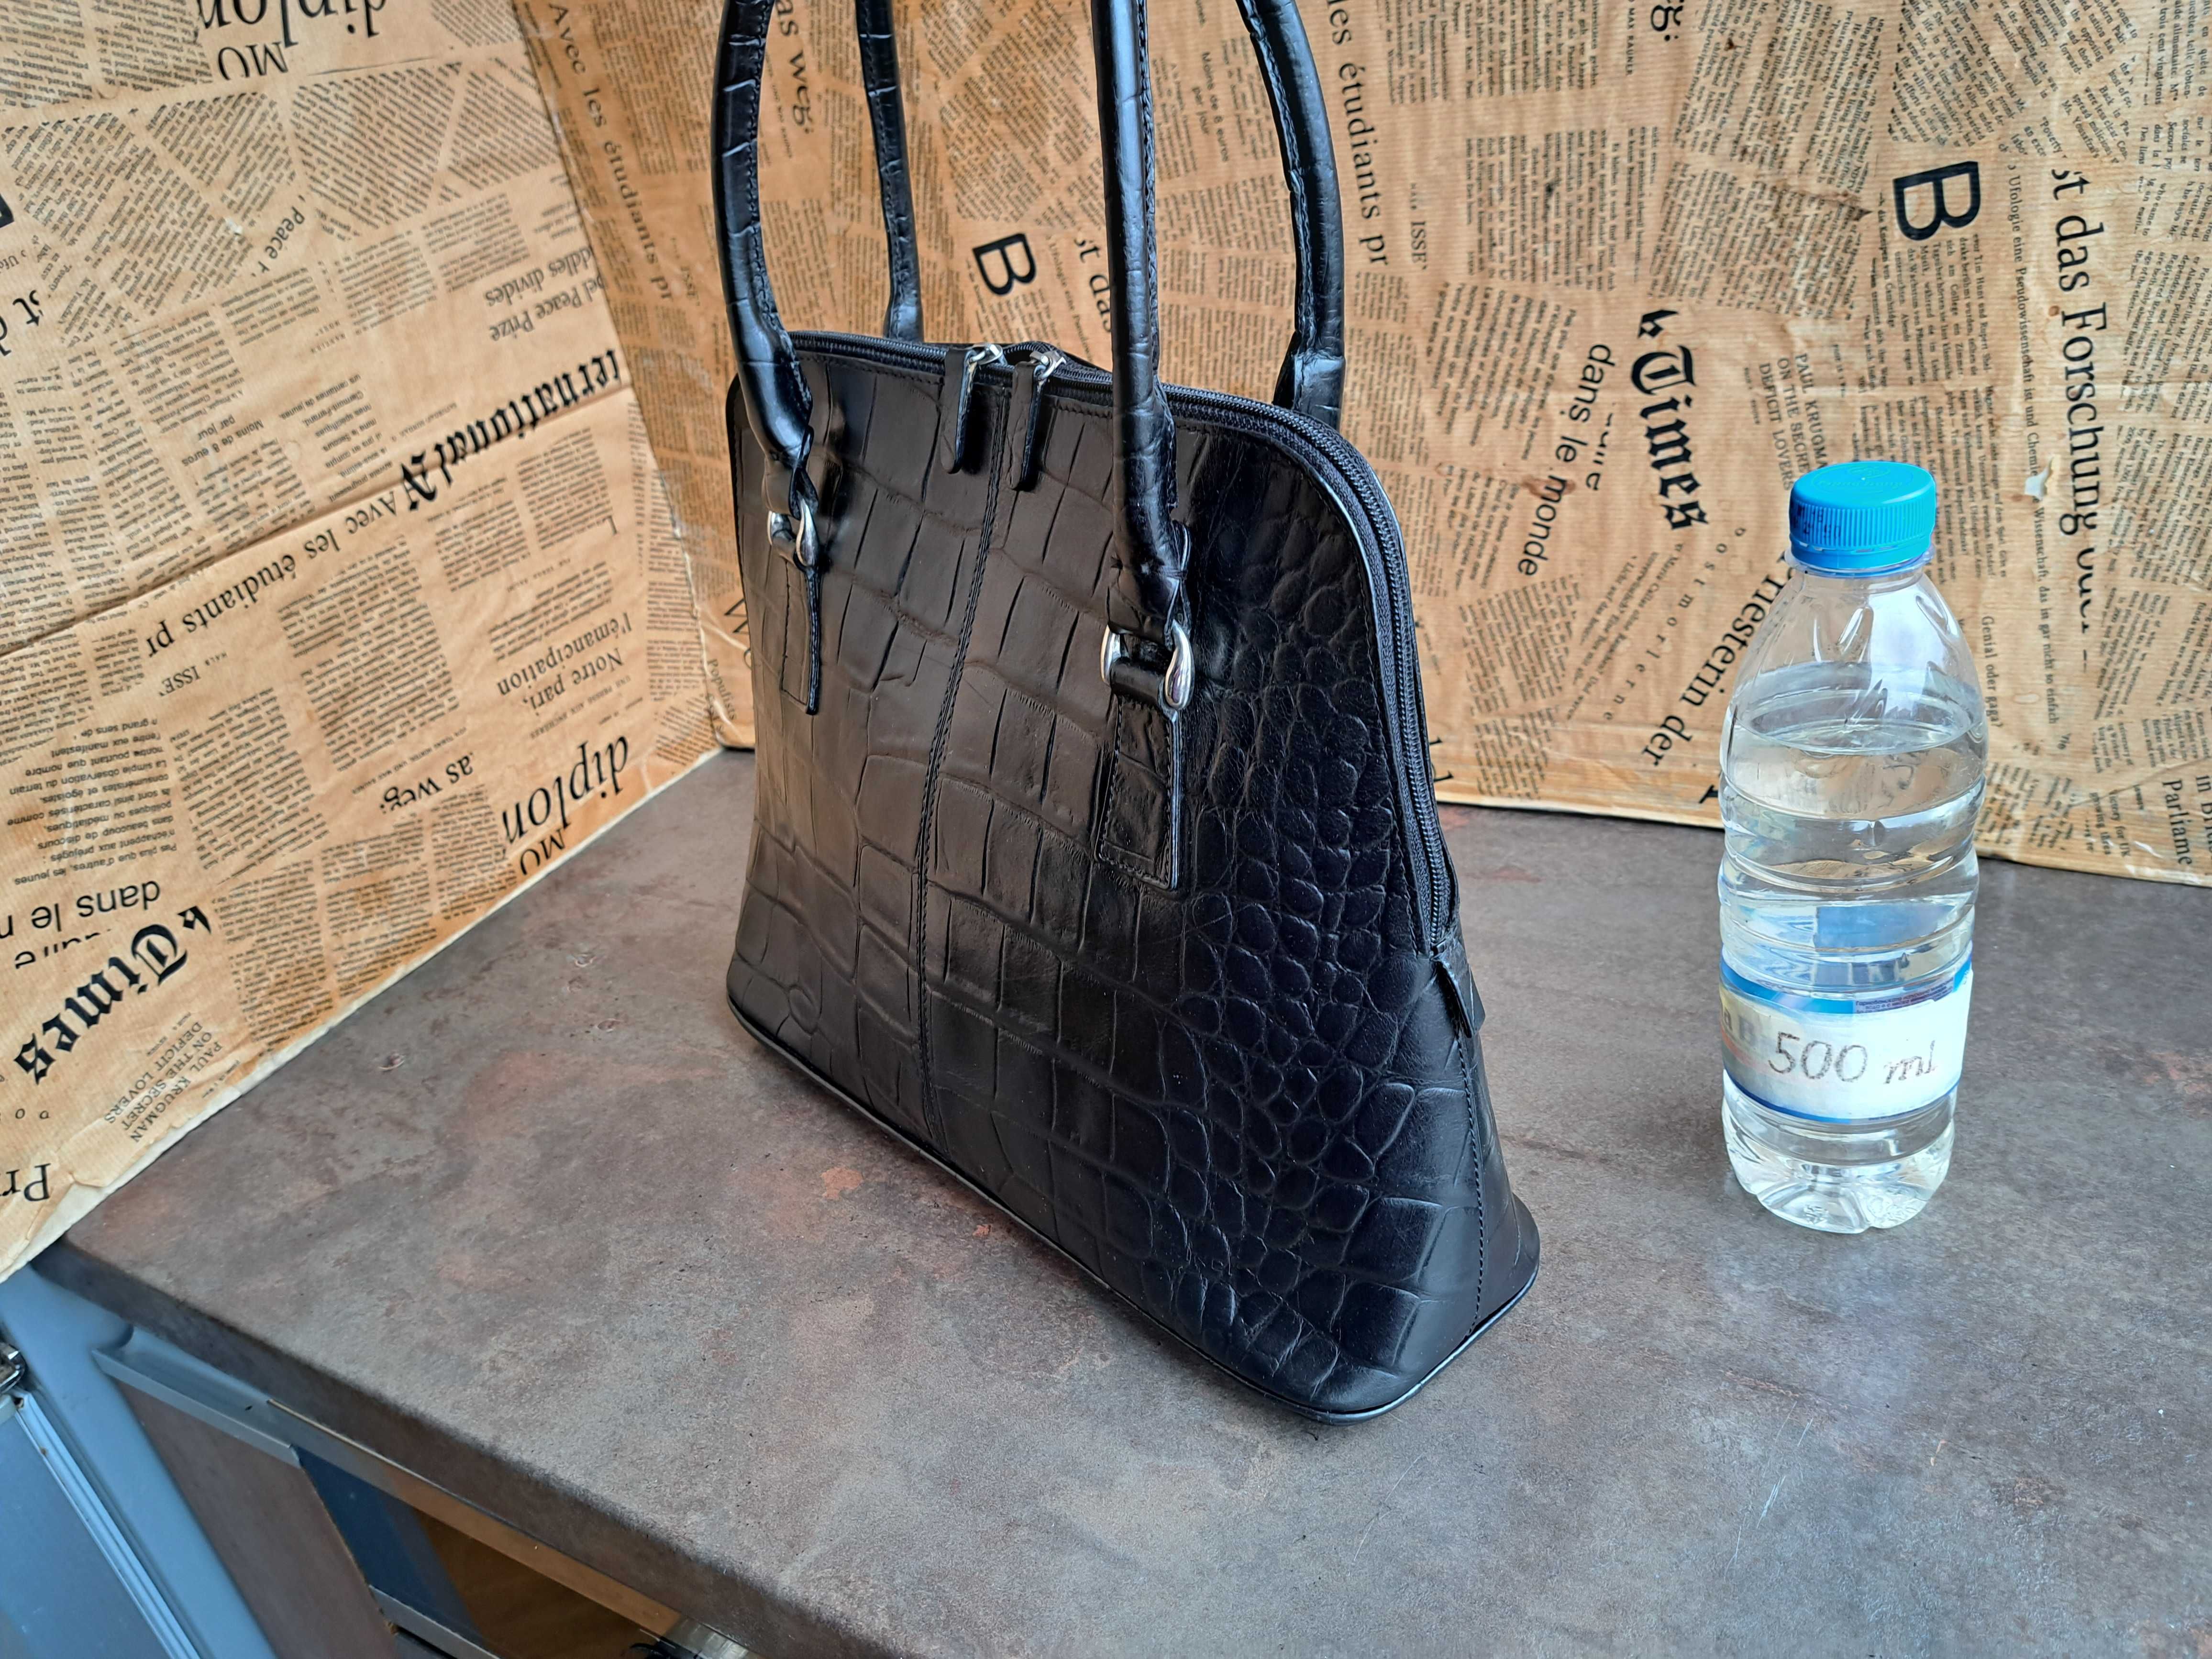 PRINCE/черна кожена чанта-естествена кожа тип крокодил